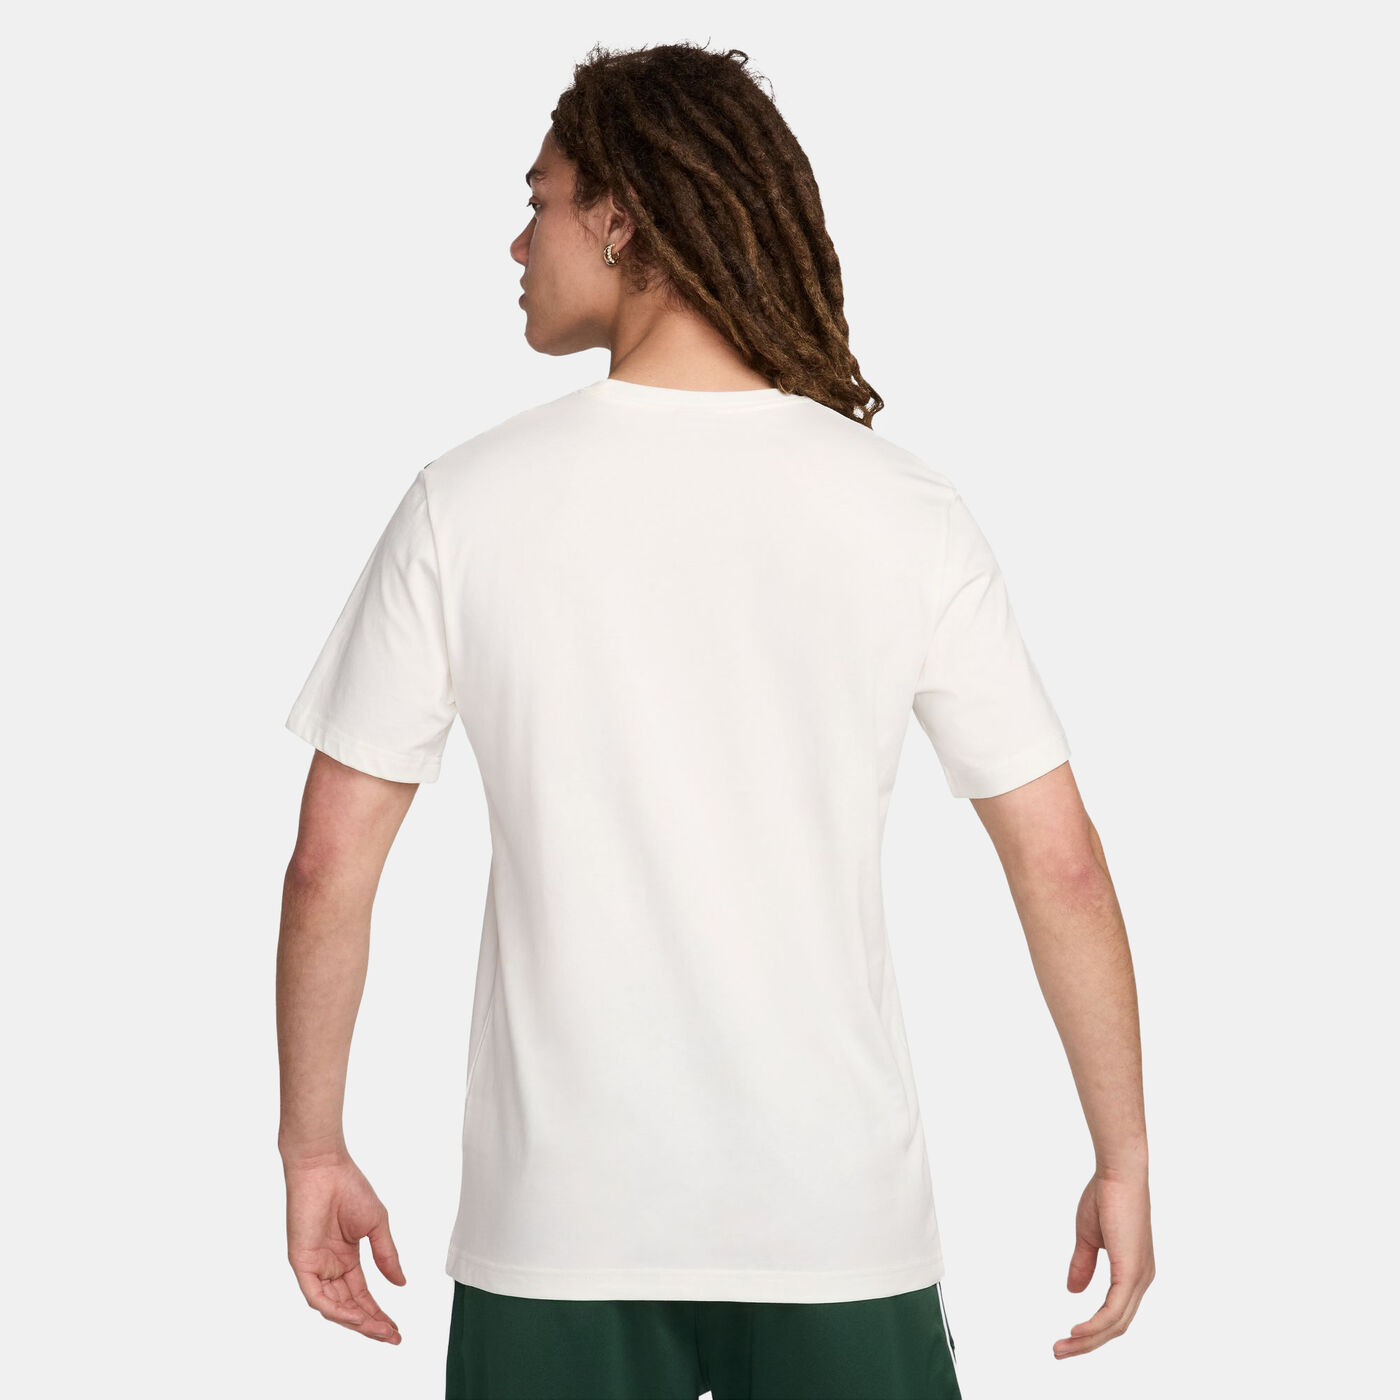 Men's Sportswear Graphic T-Shirt